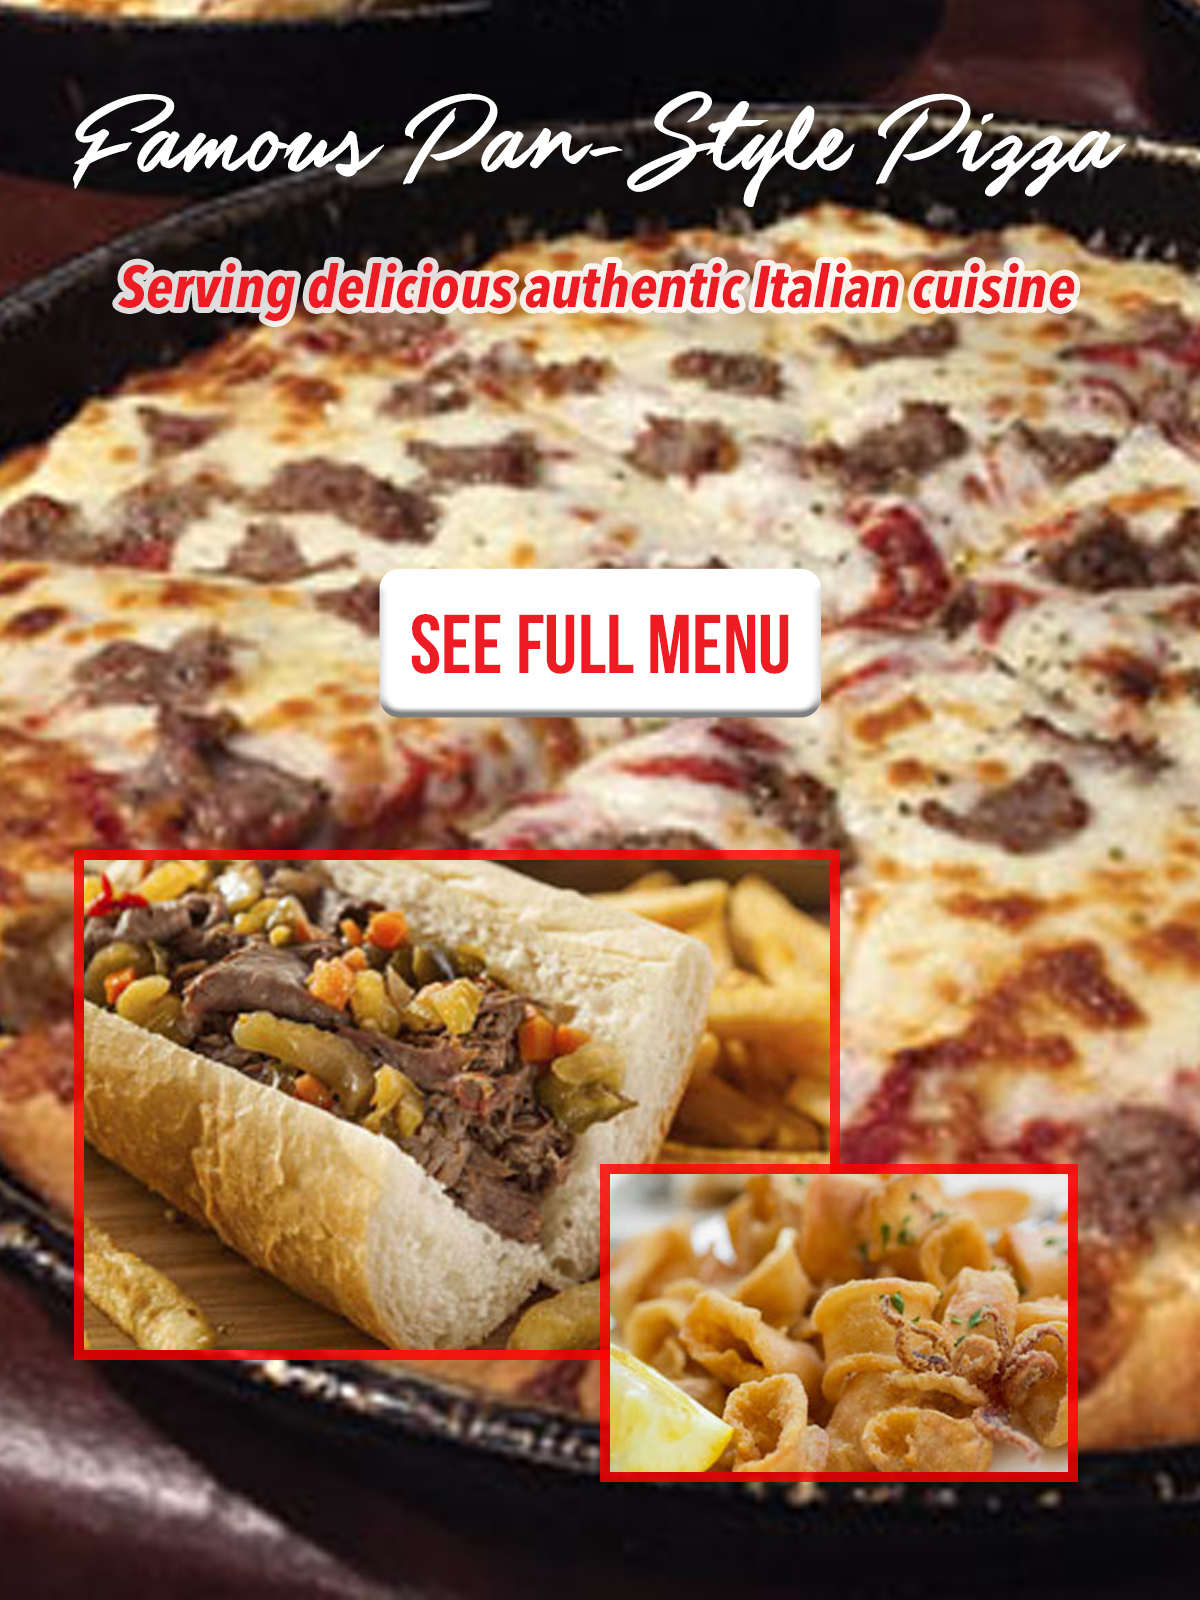 Pal Joey's menu is full of Italian food and pizza.